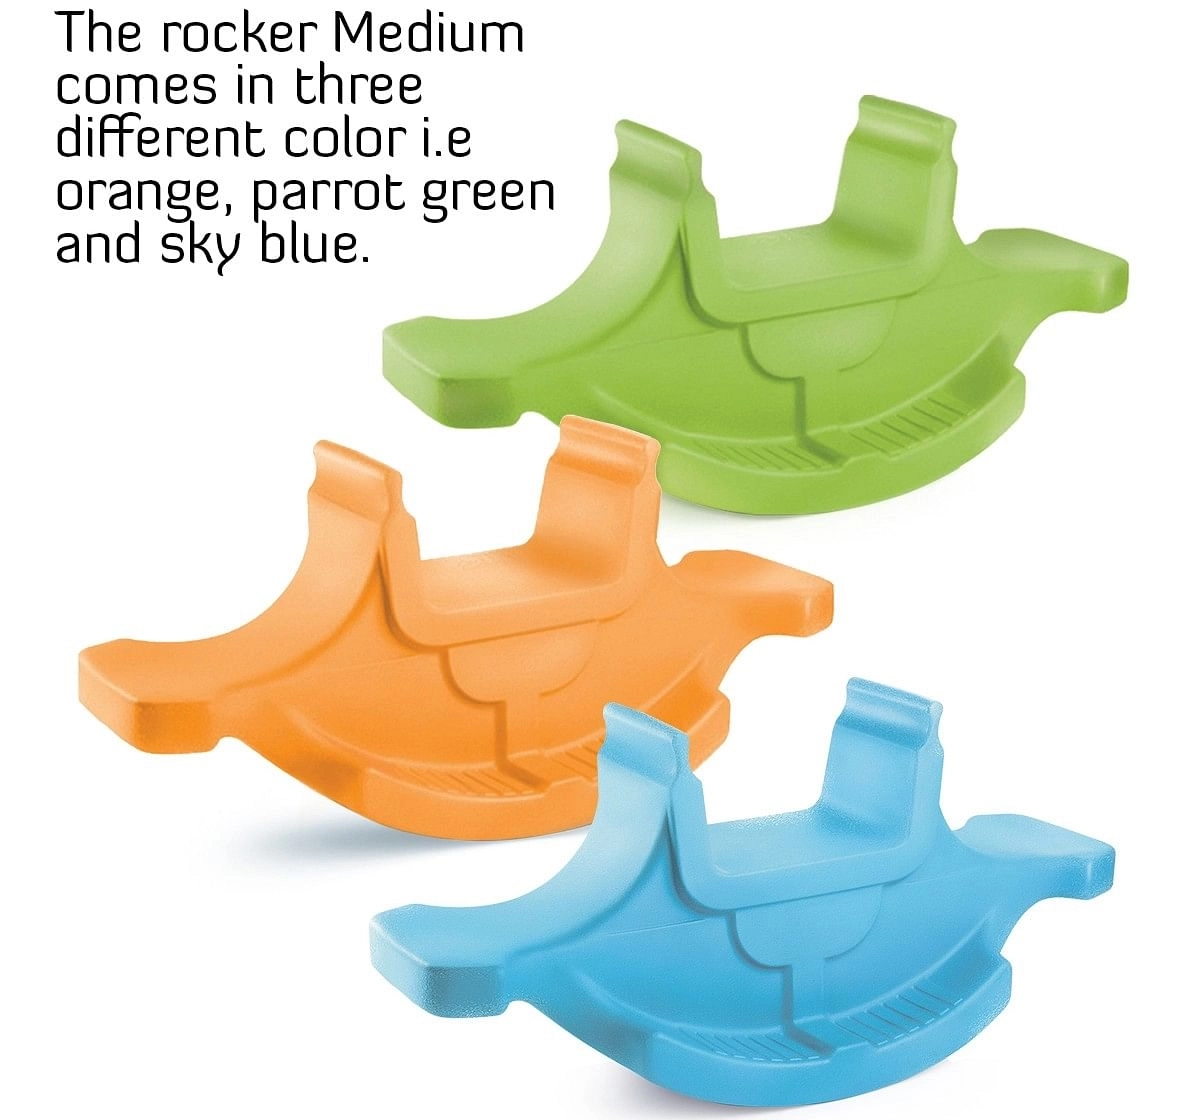 Ok Play Rocker Medium for Kids Boat Ride On Toy Green 3Y+